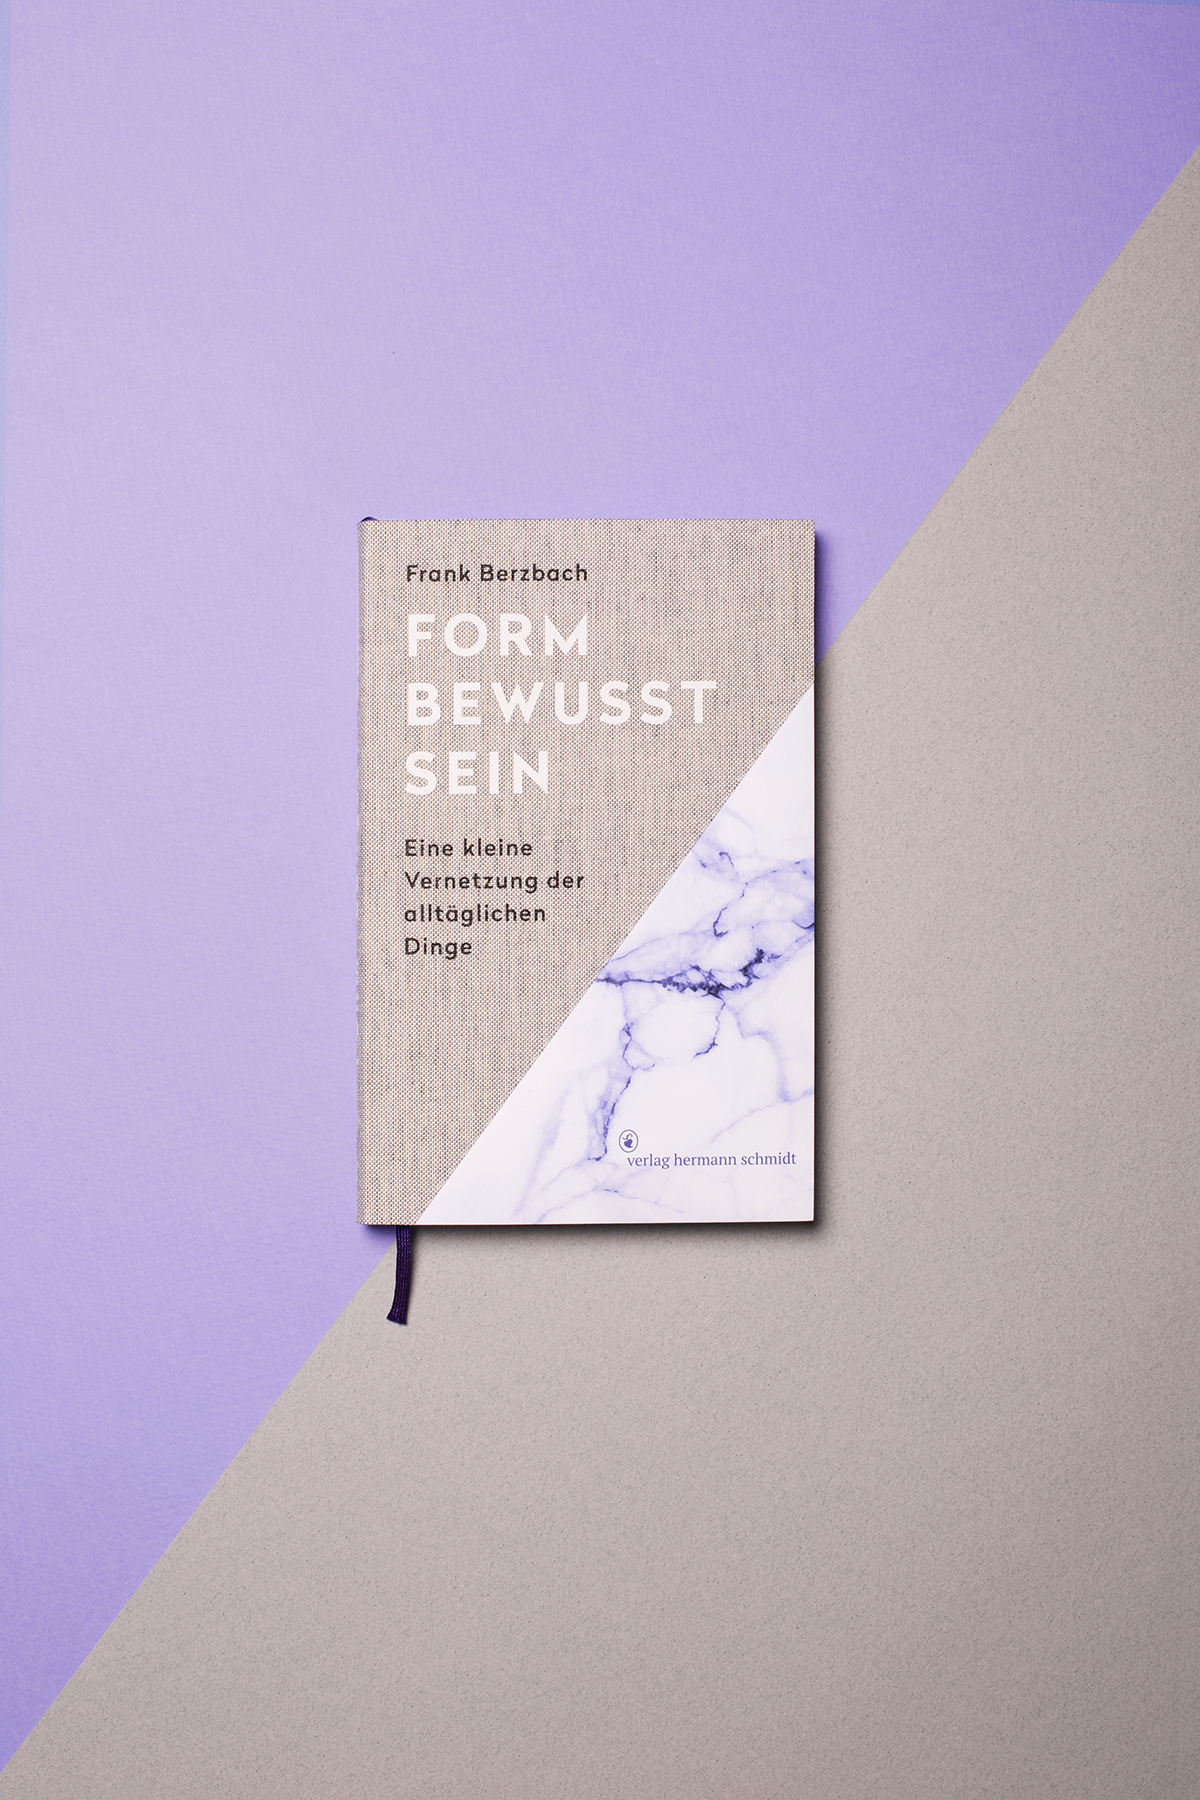 Verlag Hermann Schmidt Mailnz set design  books paper